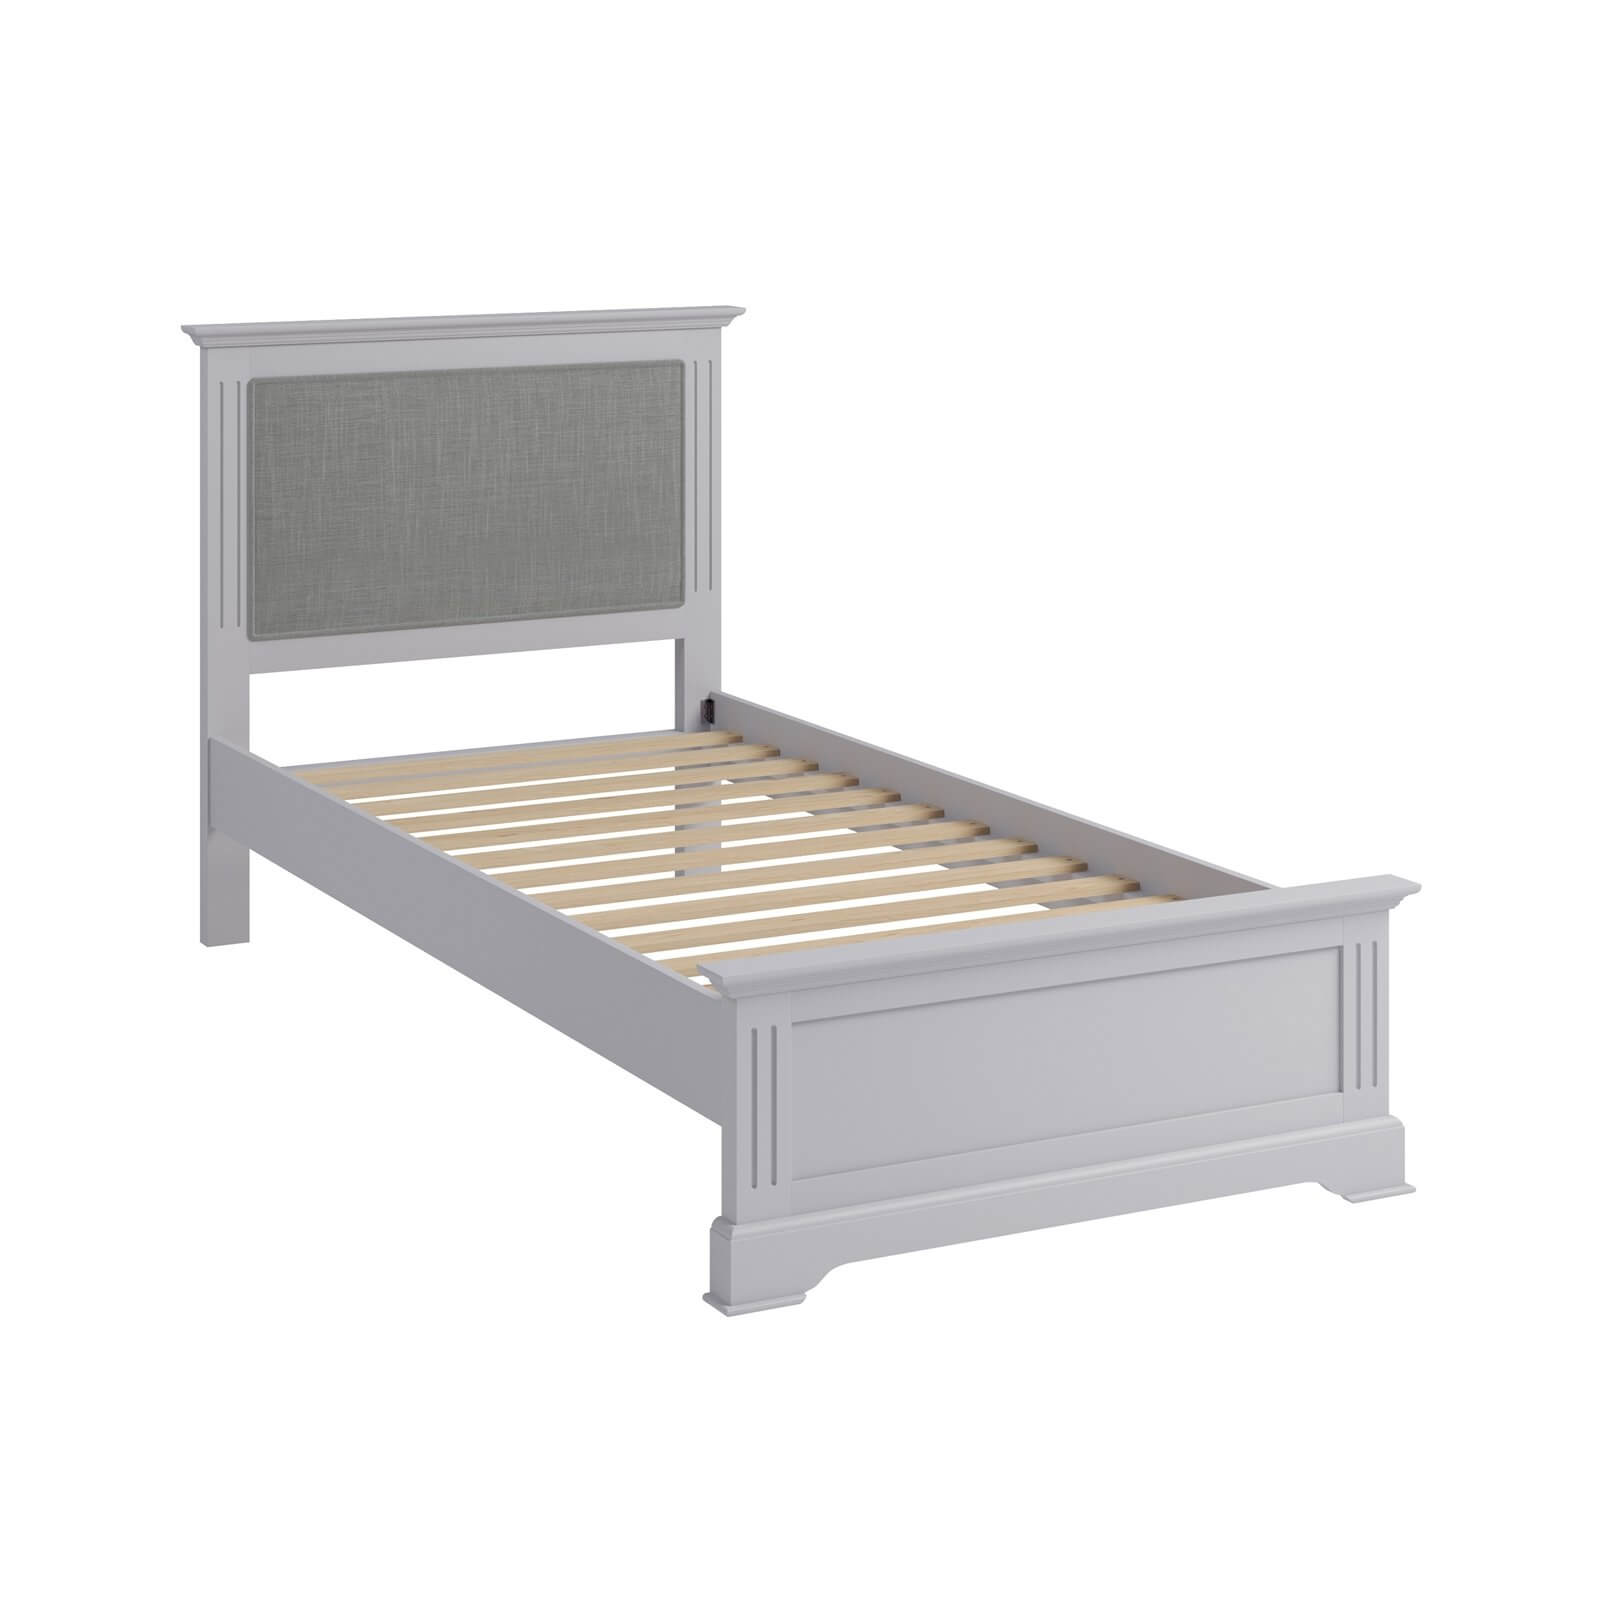 Camborne Single Bed Frame - Grey